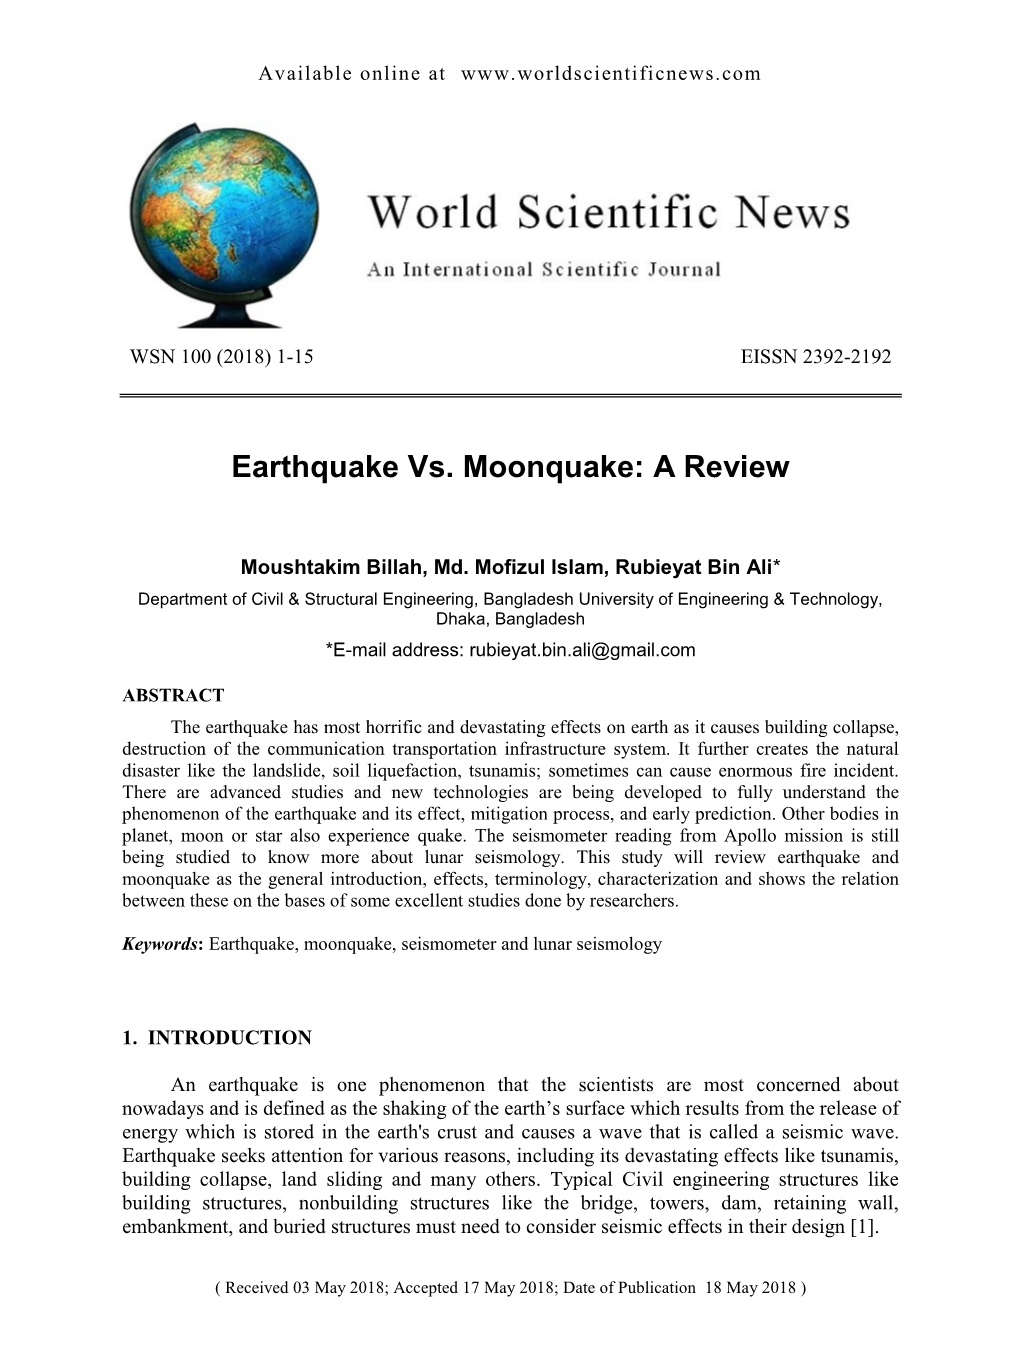 Earthquake Vs. Moonquake: a Review